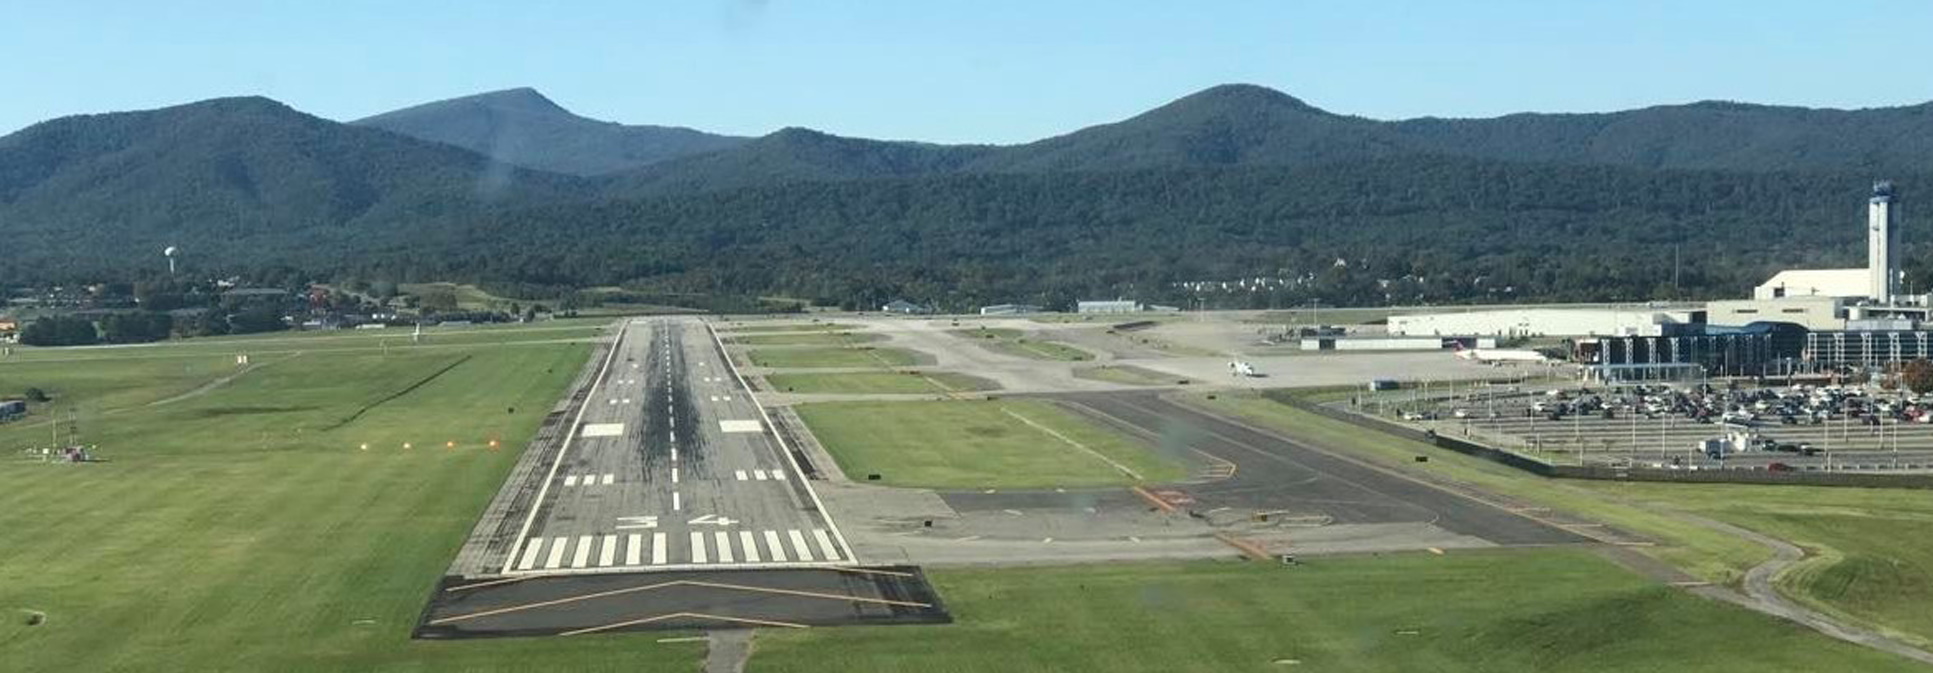 Roanoke-Blacksburg Regional Airport runway